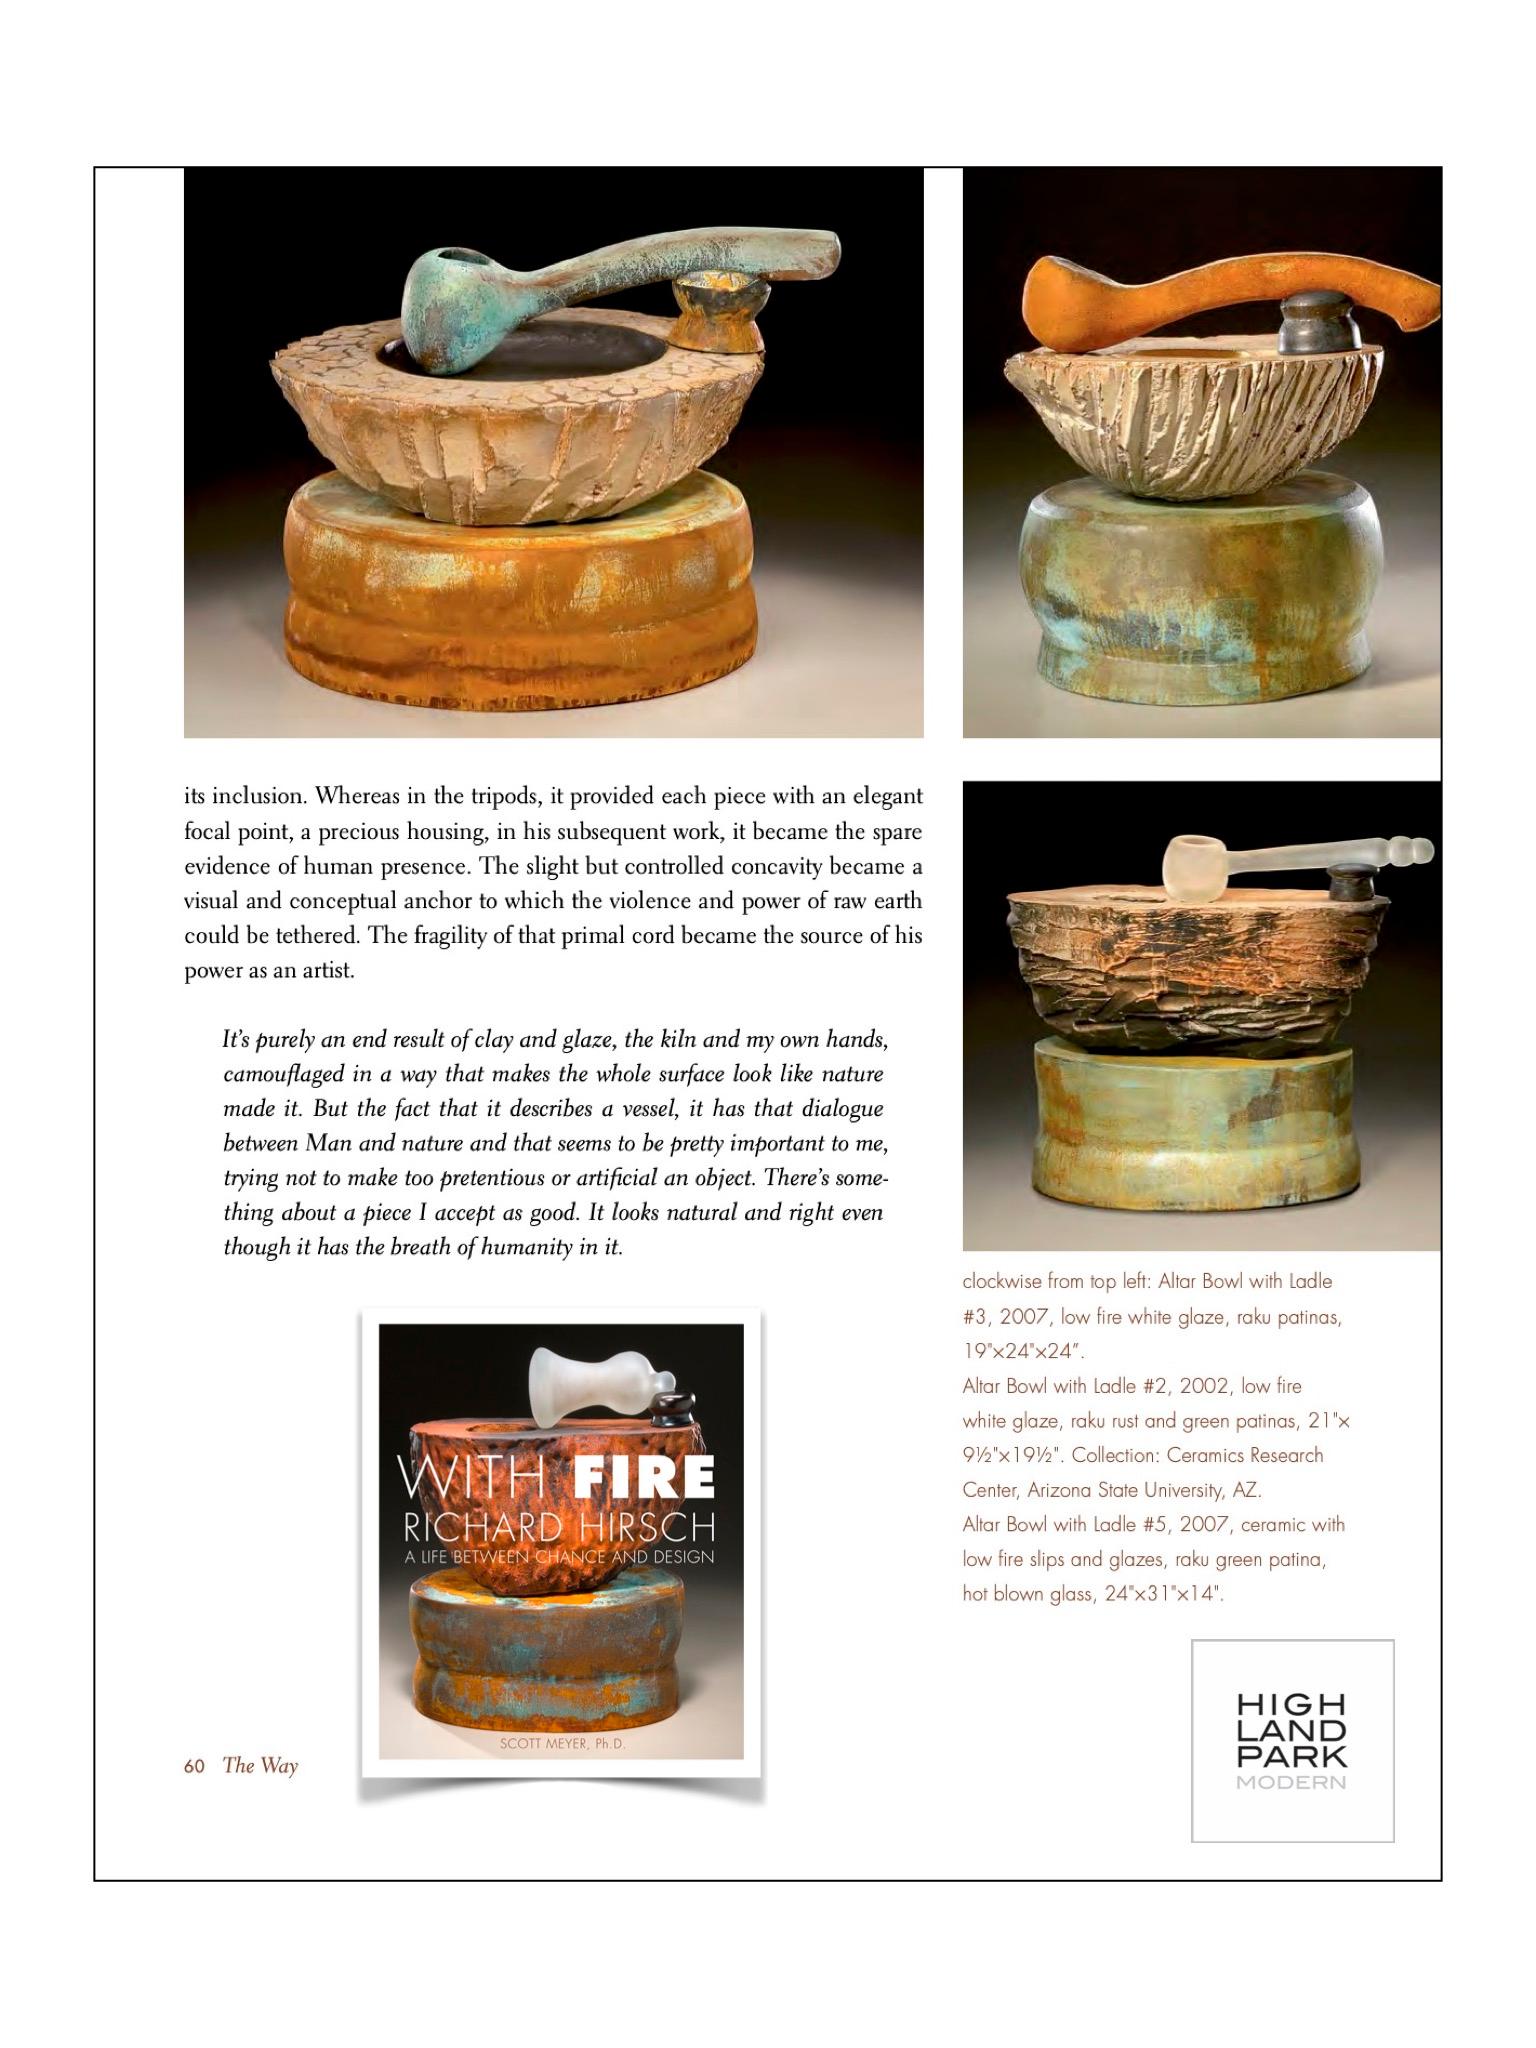 Richard Hirsch Ceramic Altar Bowl with Ladle #3, 2007 For Sale 2